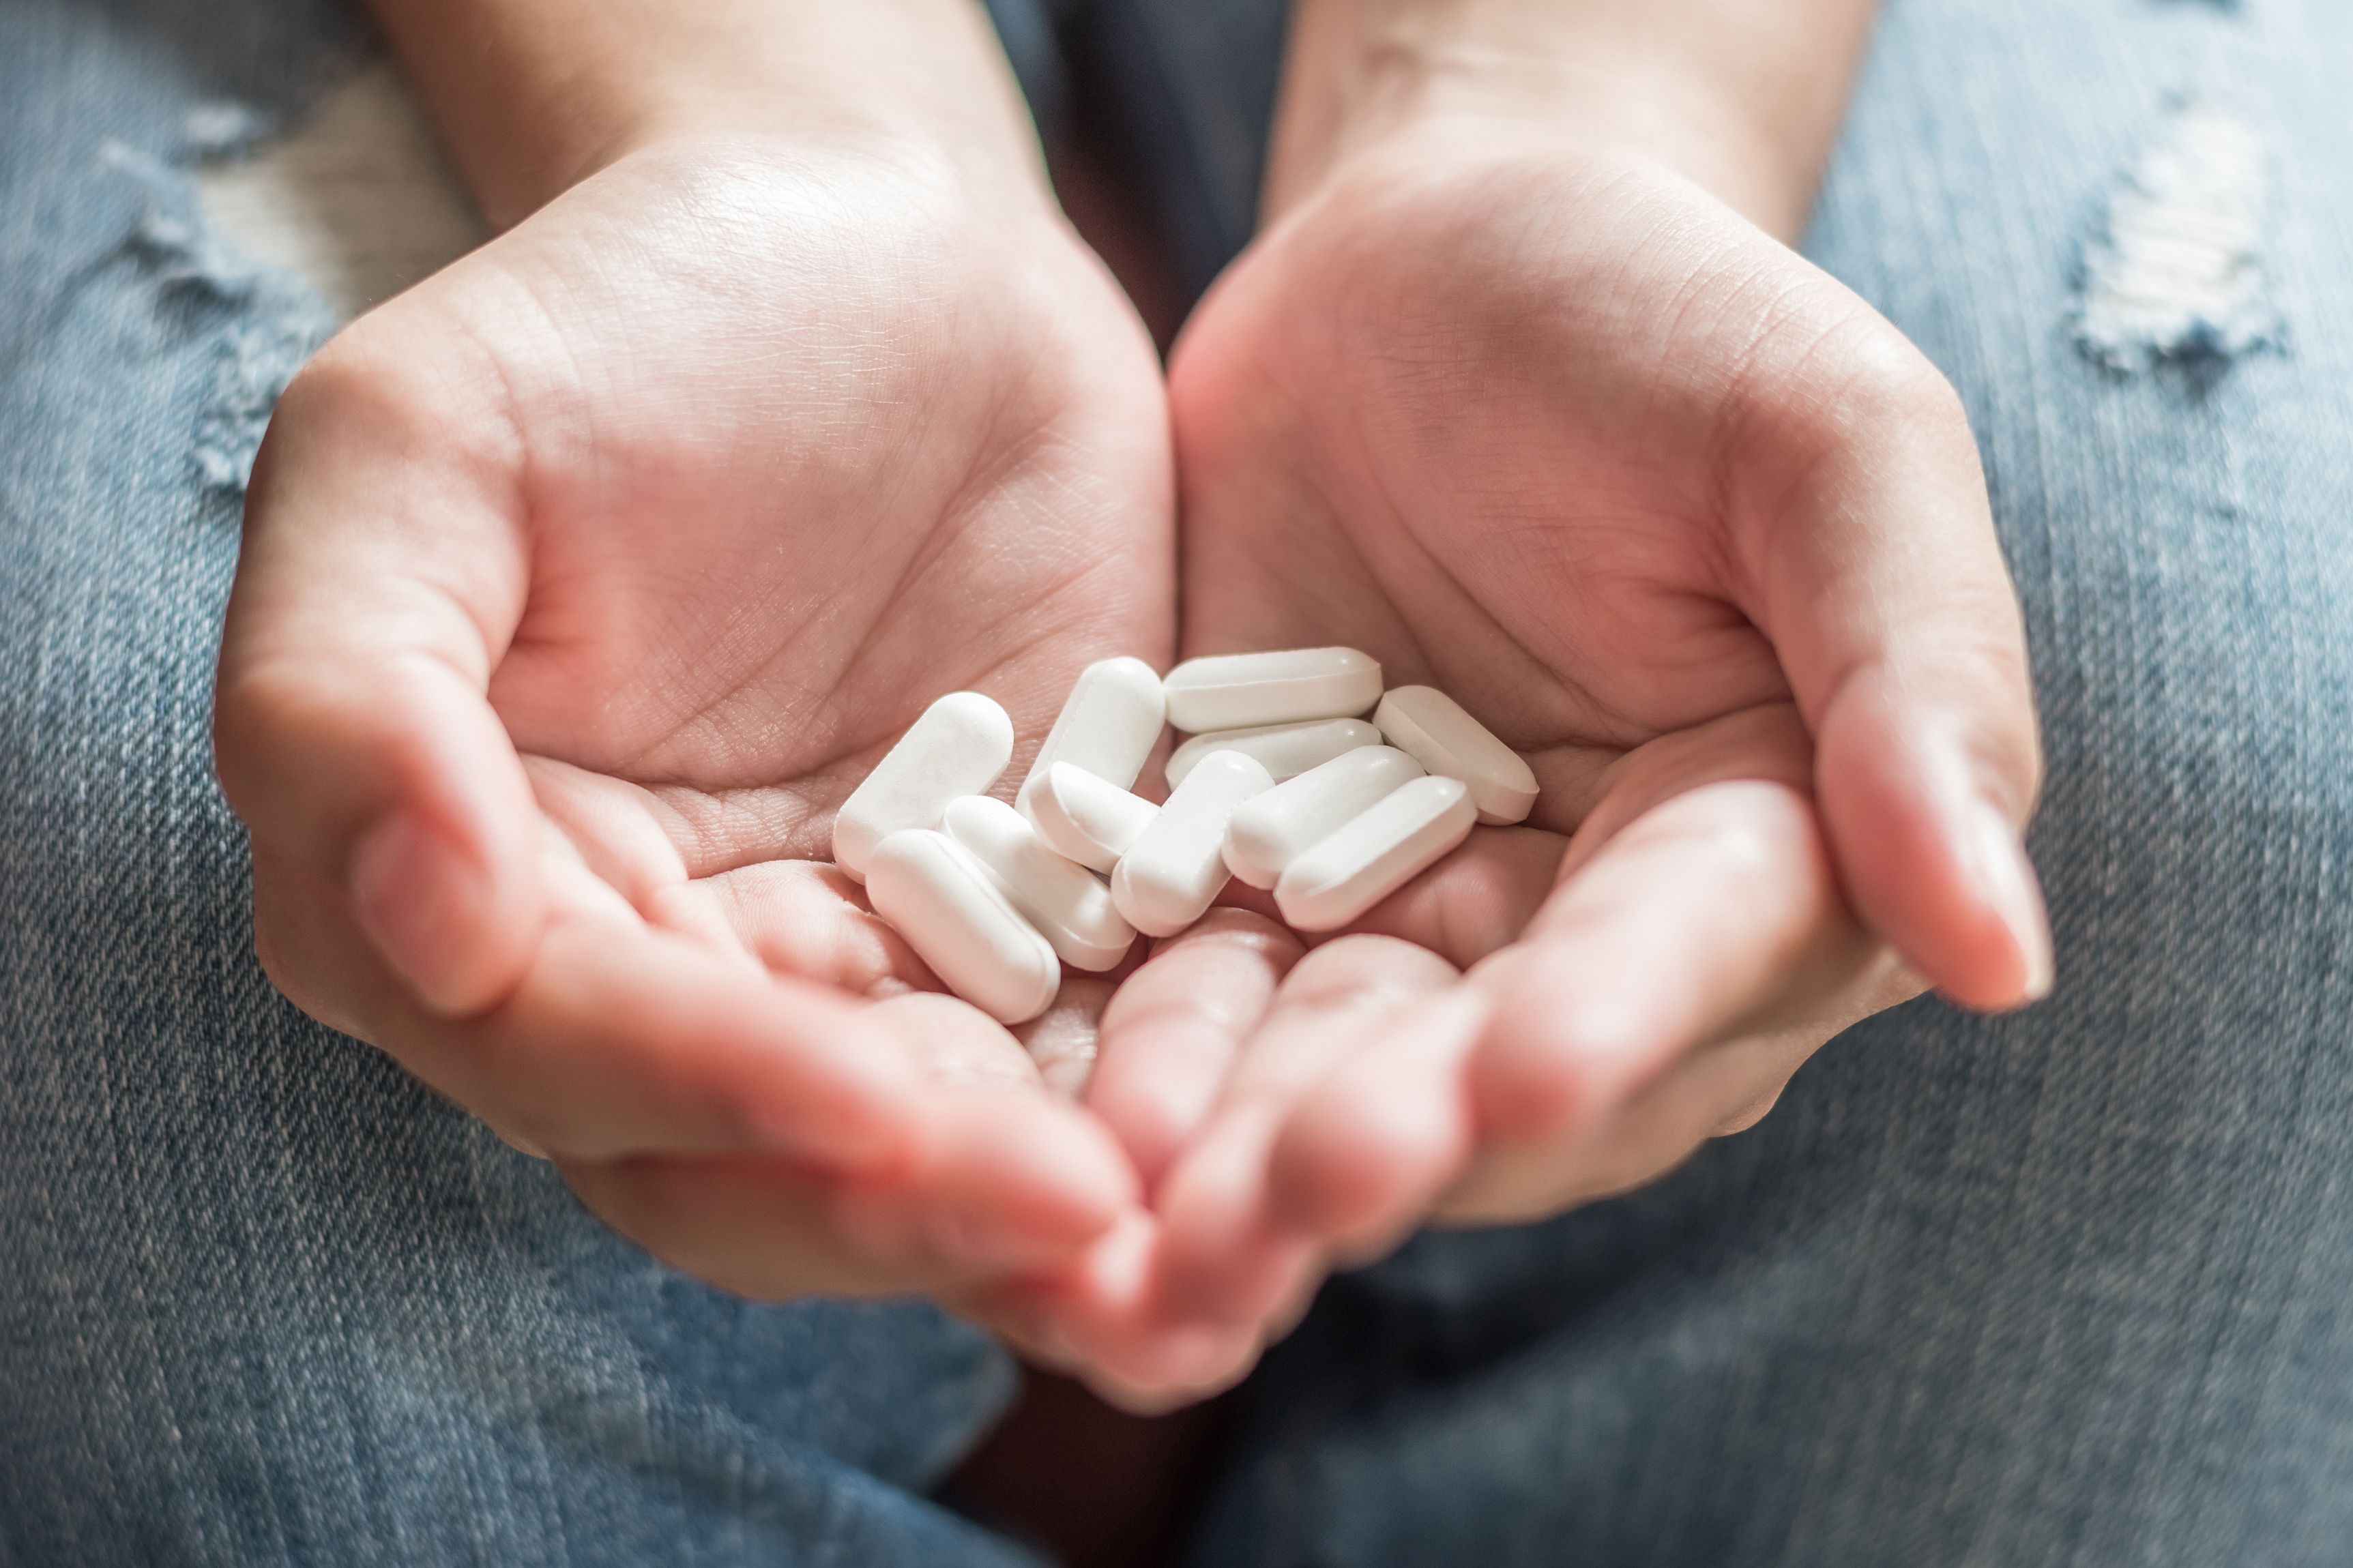 antidote for paracetamol toxicity